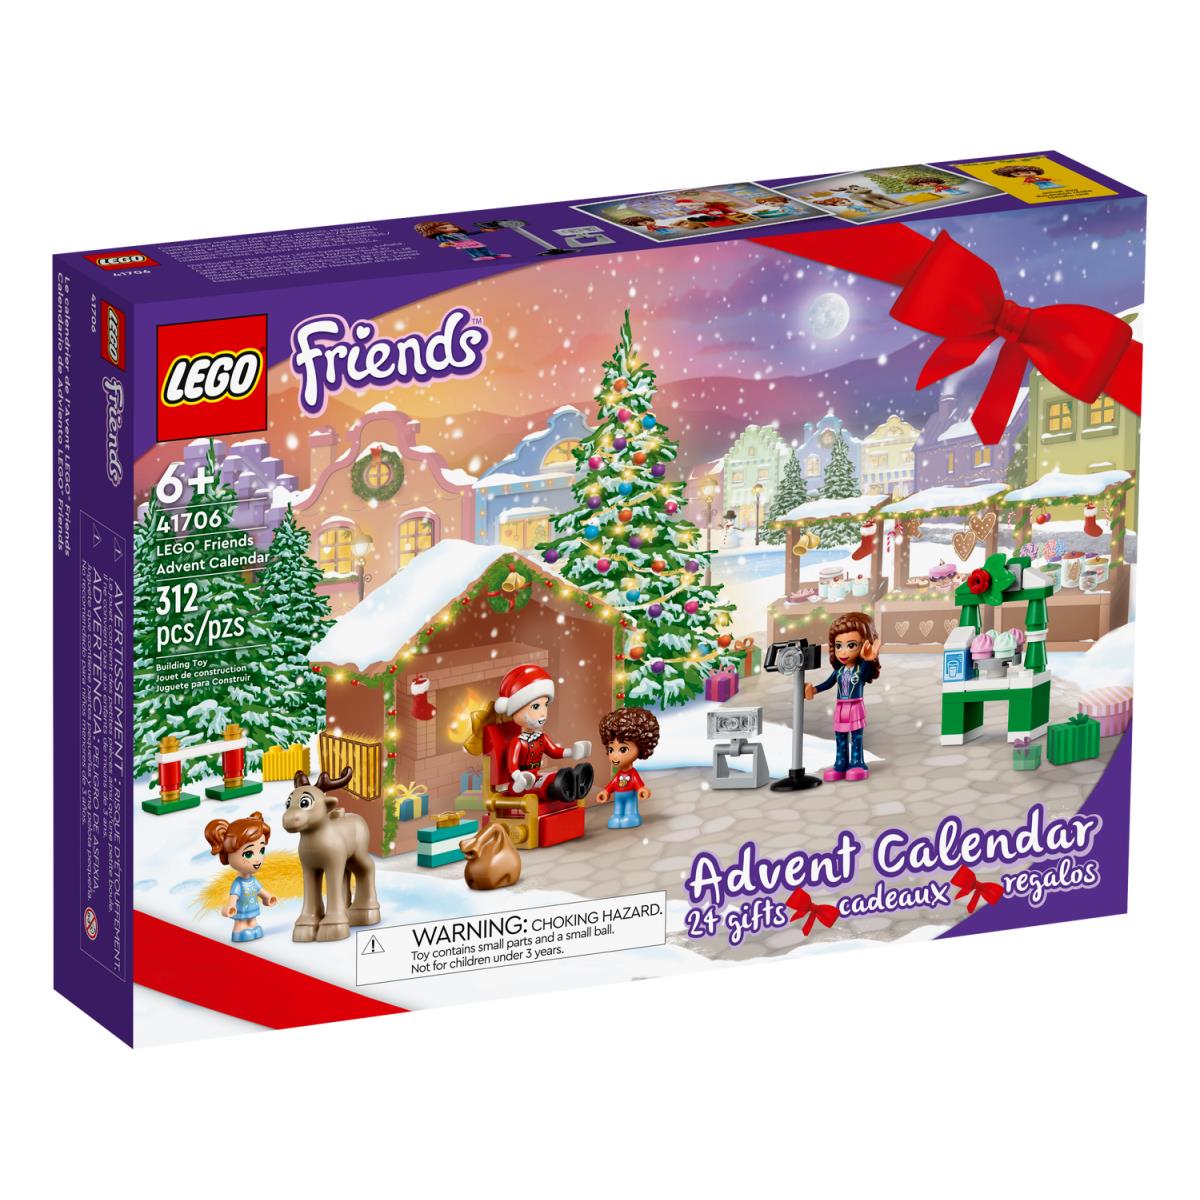 Lego 41706 24 Giftsfriends Advent Calendar Building Toy Set Ages 6+ 312 Pieces q